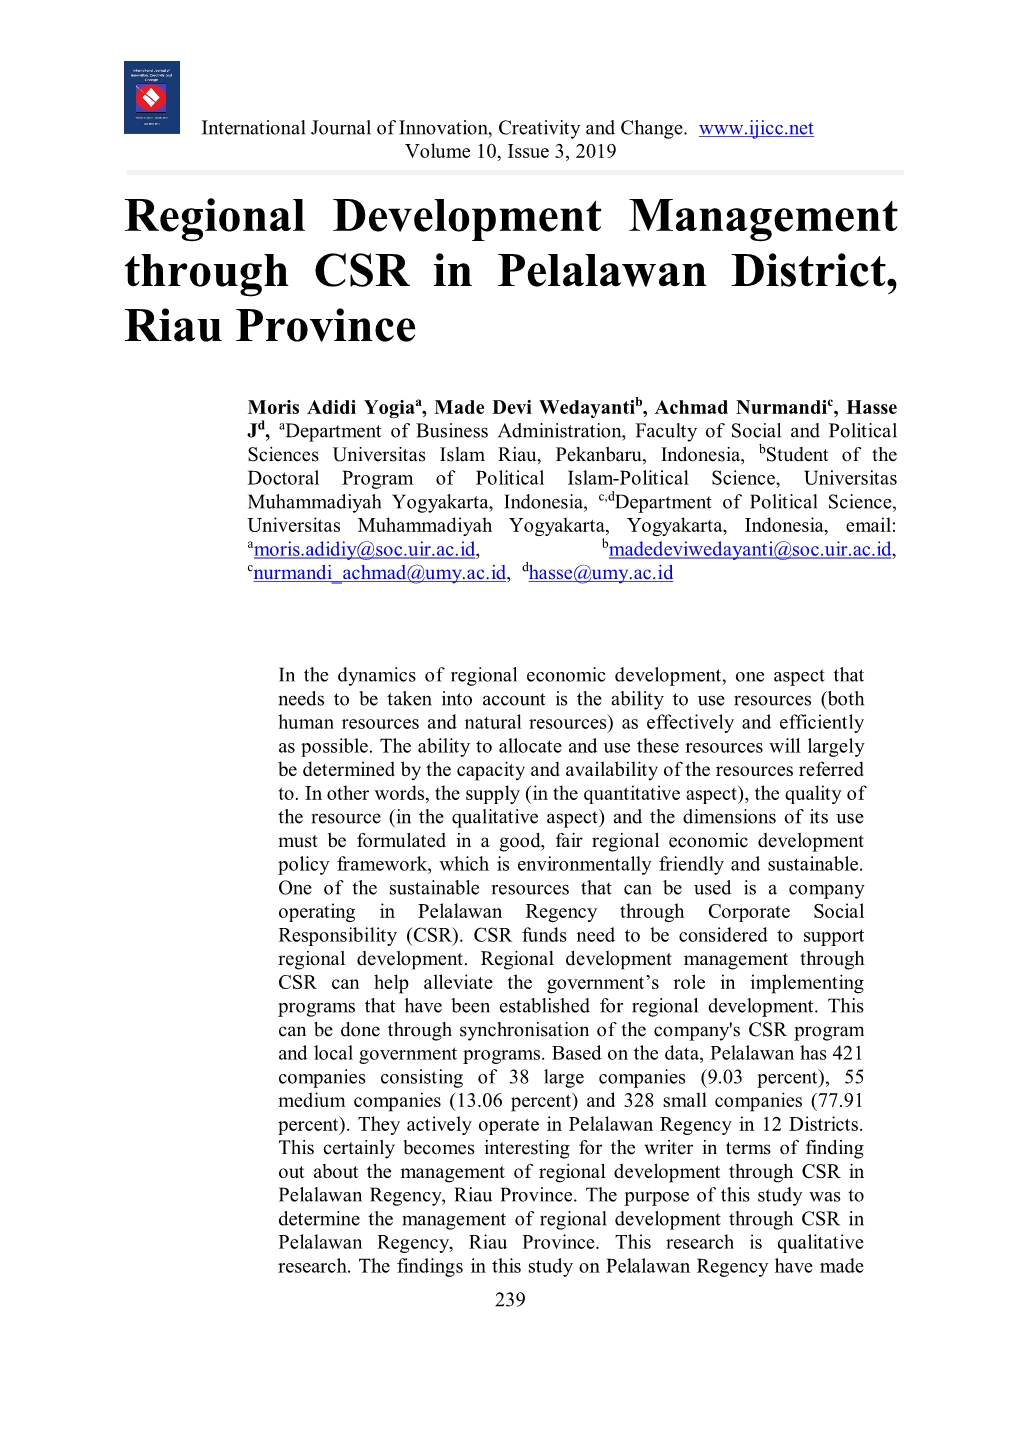 Regional Development Management Through CSR in Pelalawan District, Riau Province